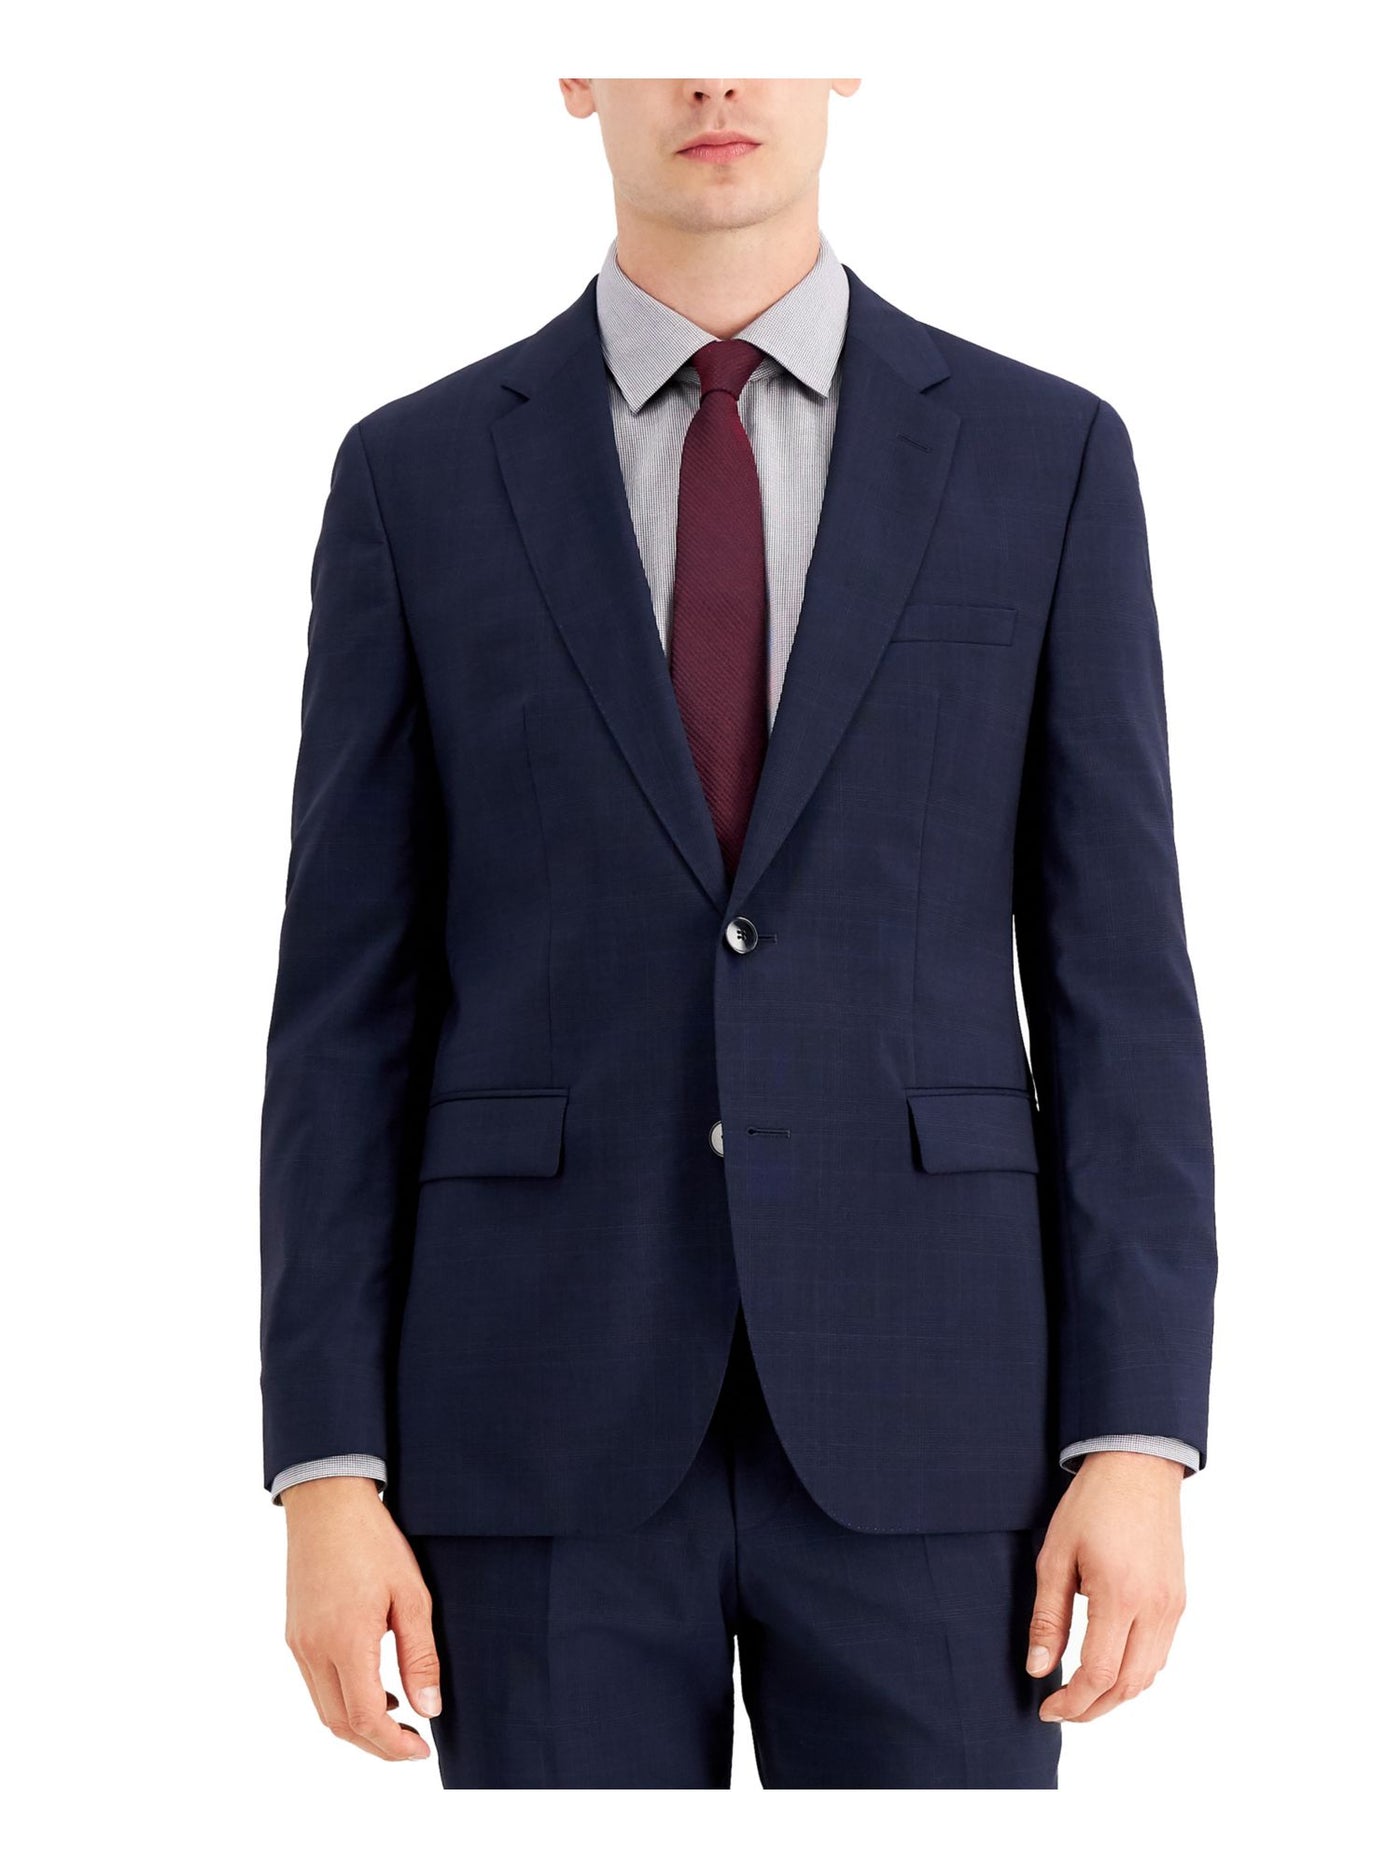 HUGO BOSS Mens Navy Single Breasted, Classic Fit Wool Blend Suit Separate Blazer Jacket 46R